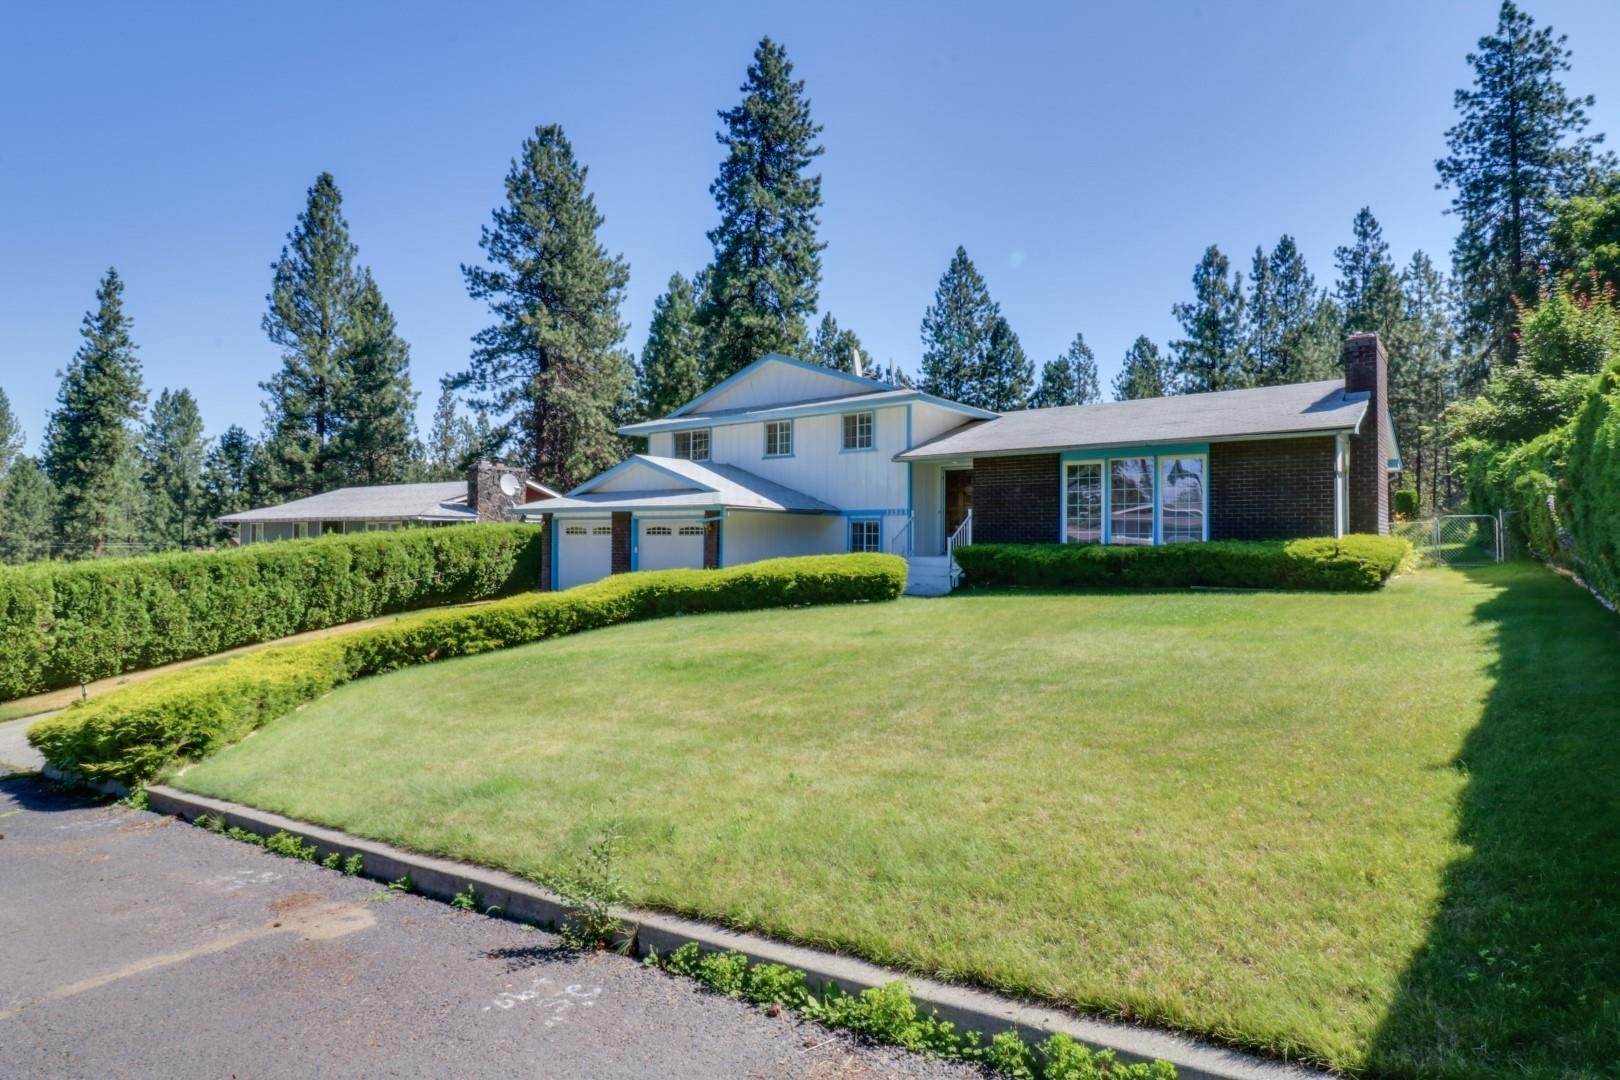 2. Single Family Homes for Sale at 11320 N Astor Street Spokane, Washington 99218 United States